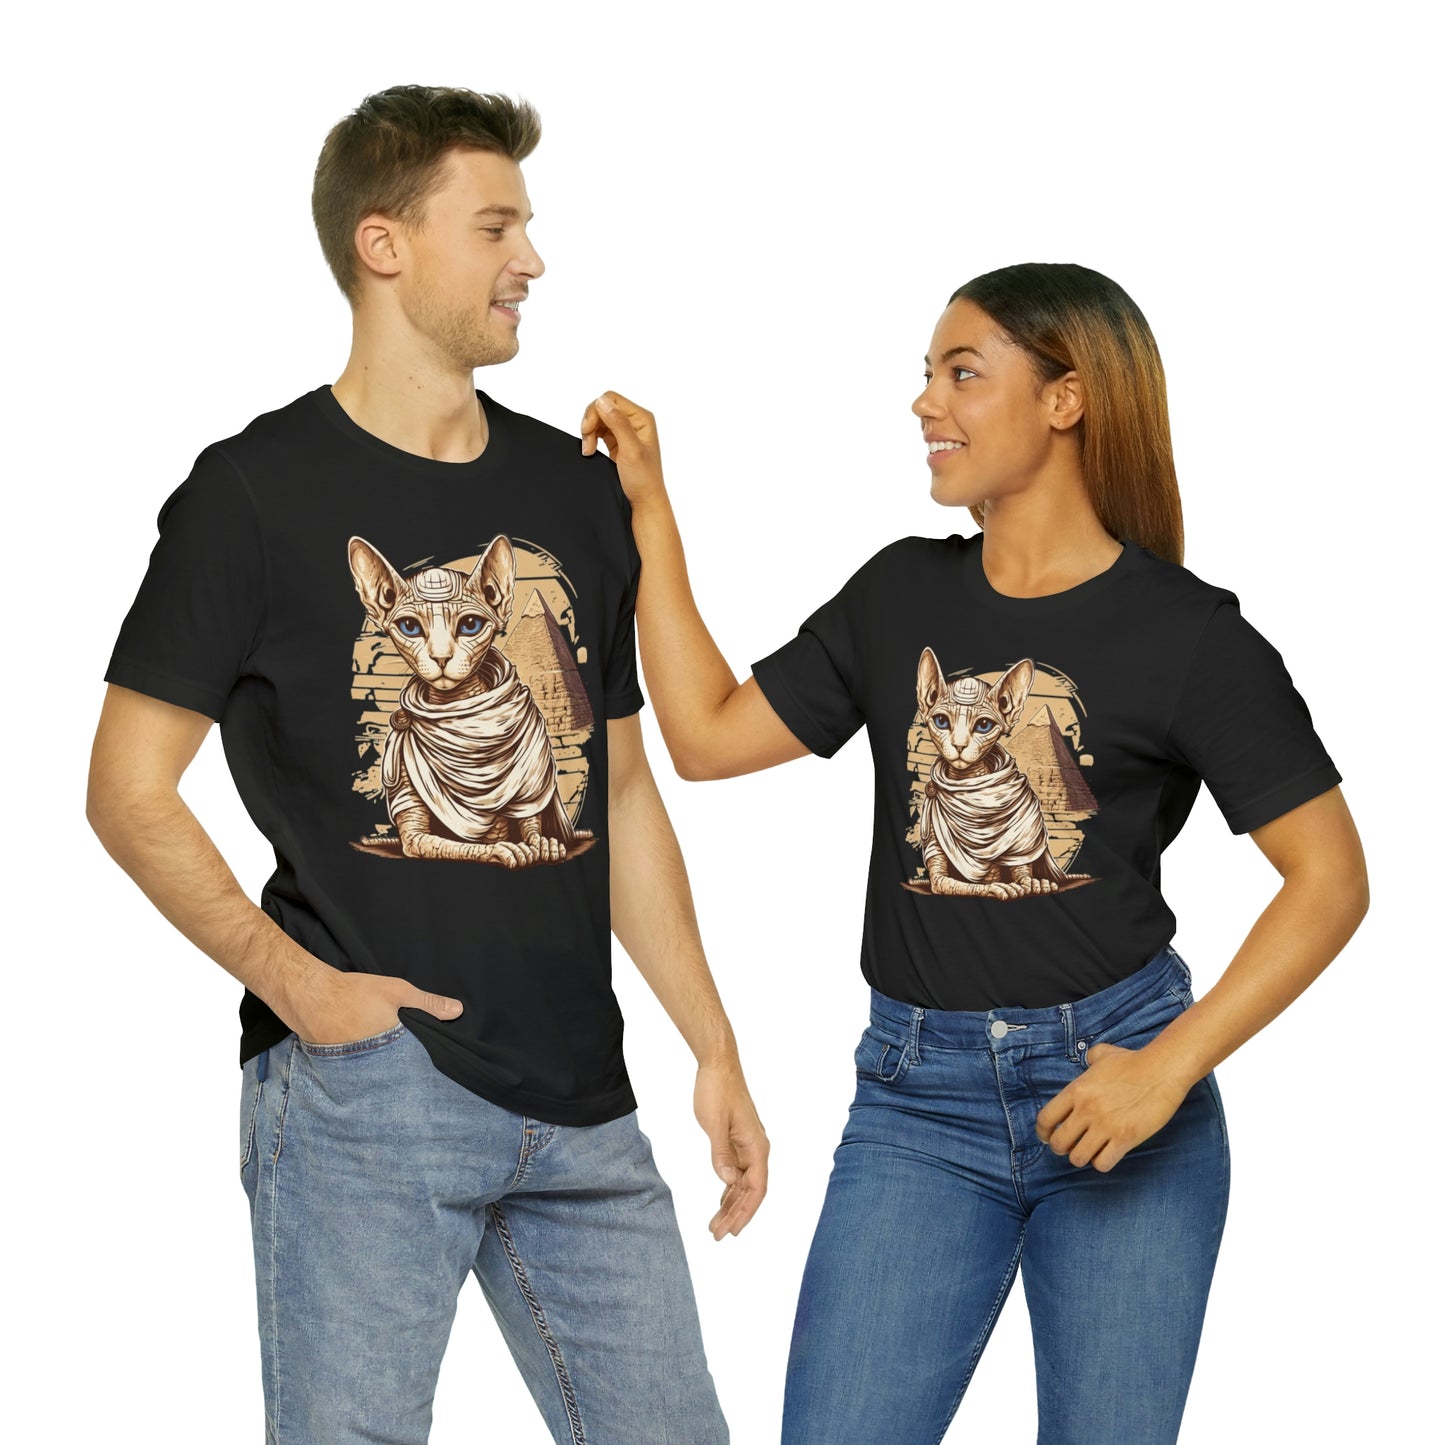 Sphynx cat T-shirt